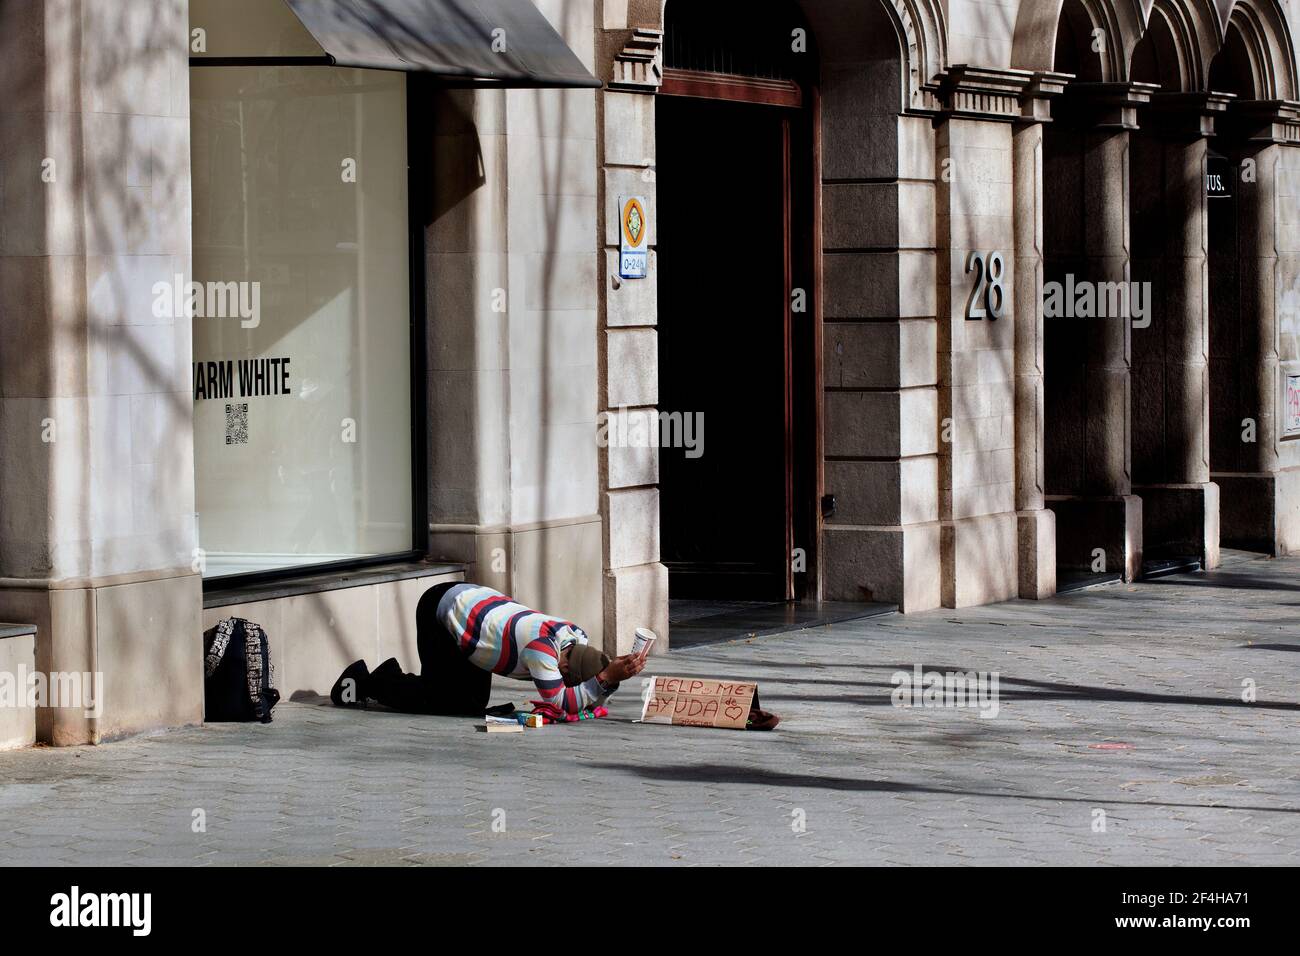 Man begging in Passeo de Gracia, Barcelona, Spain. Stock Photo